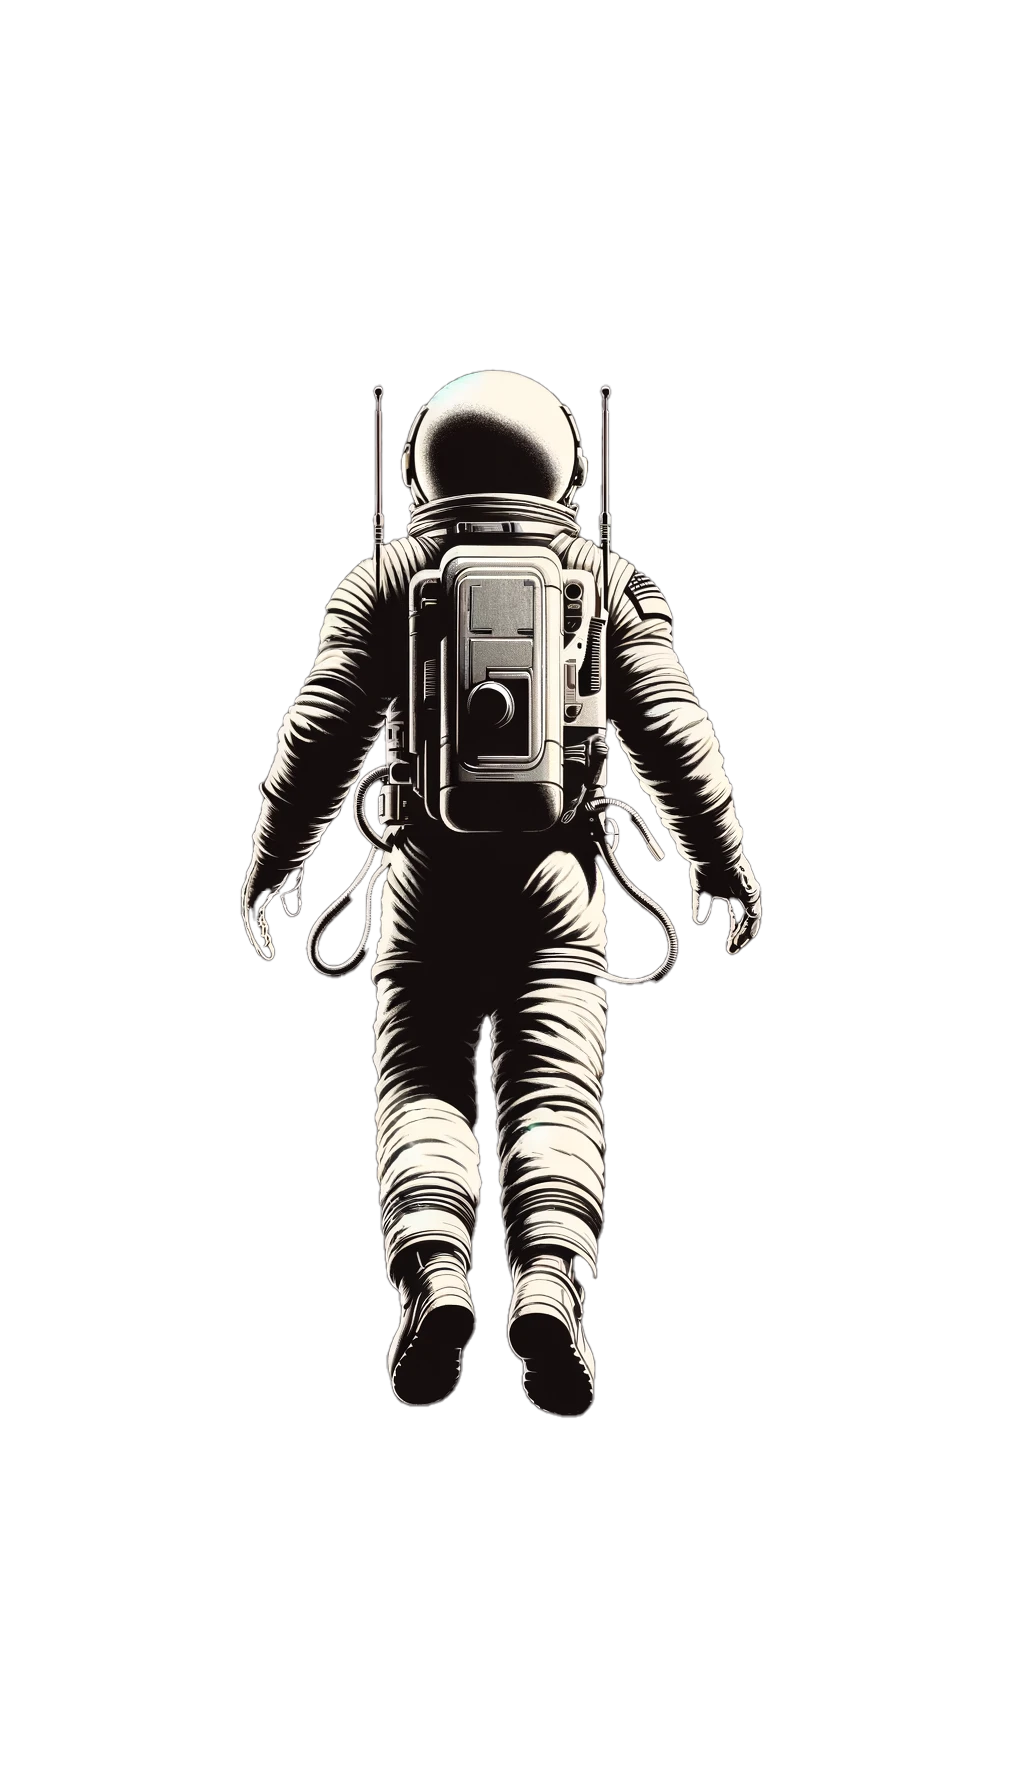 Astronaut elevating